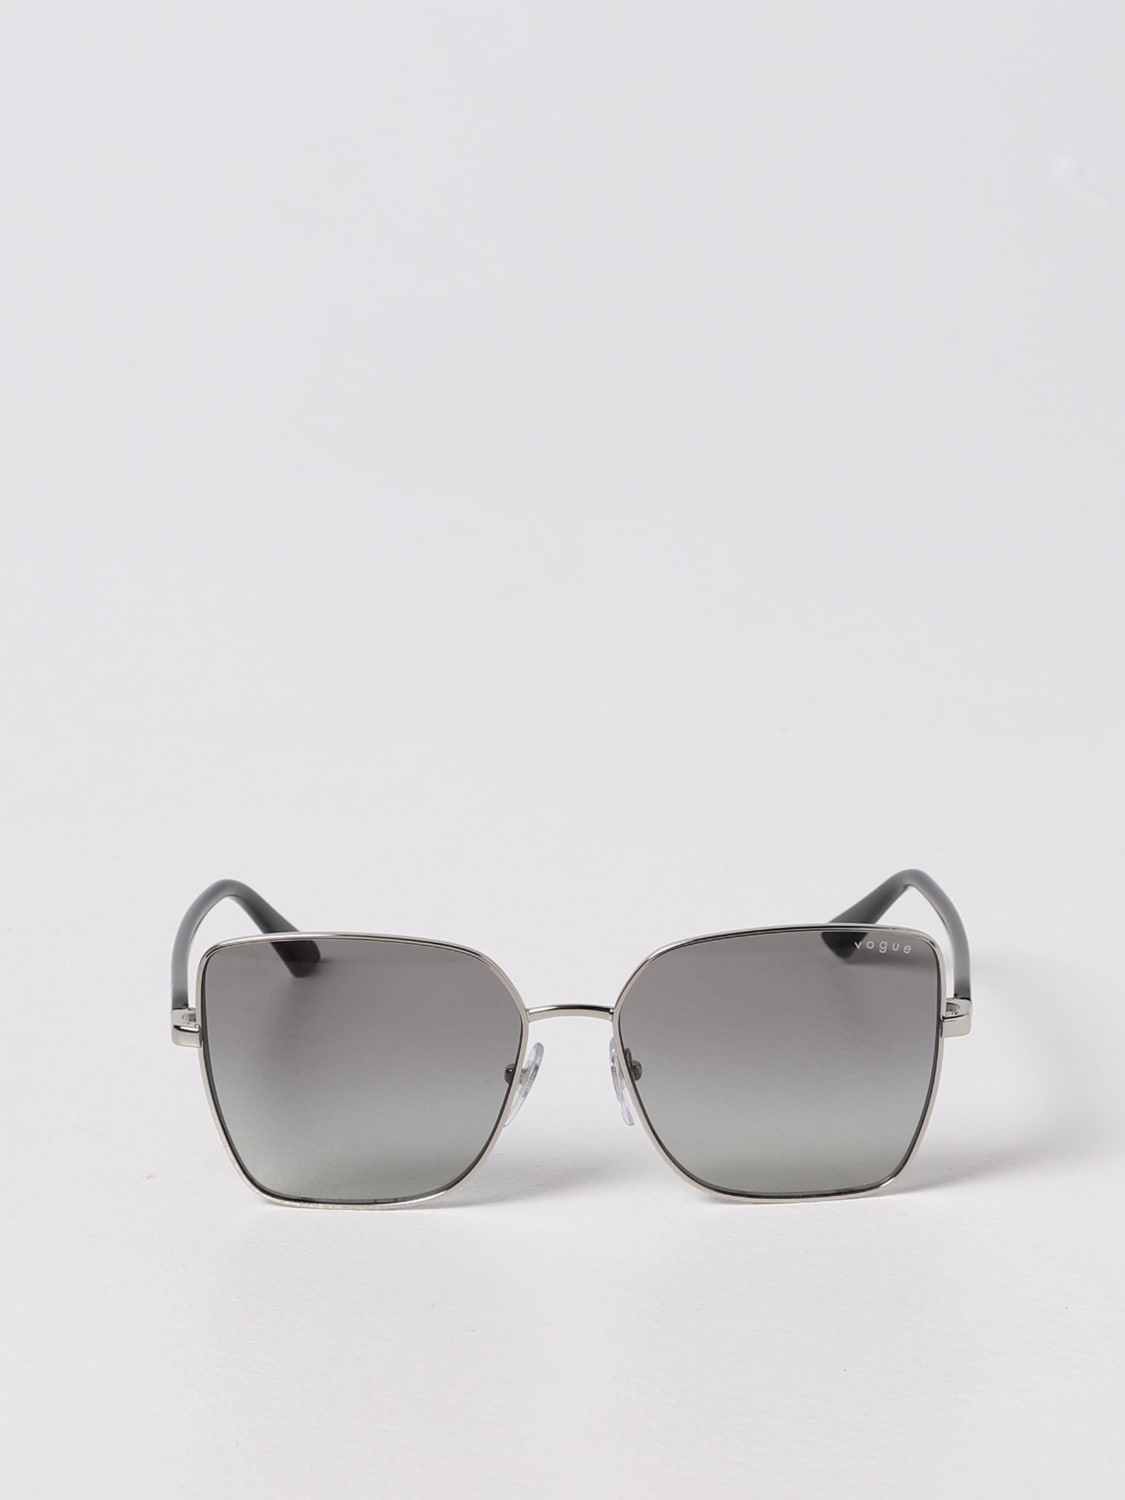 Sunglasses Vogue: Vogue sunglasses in metal grey 2